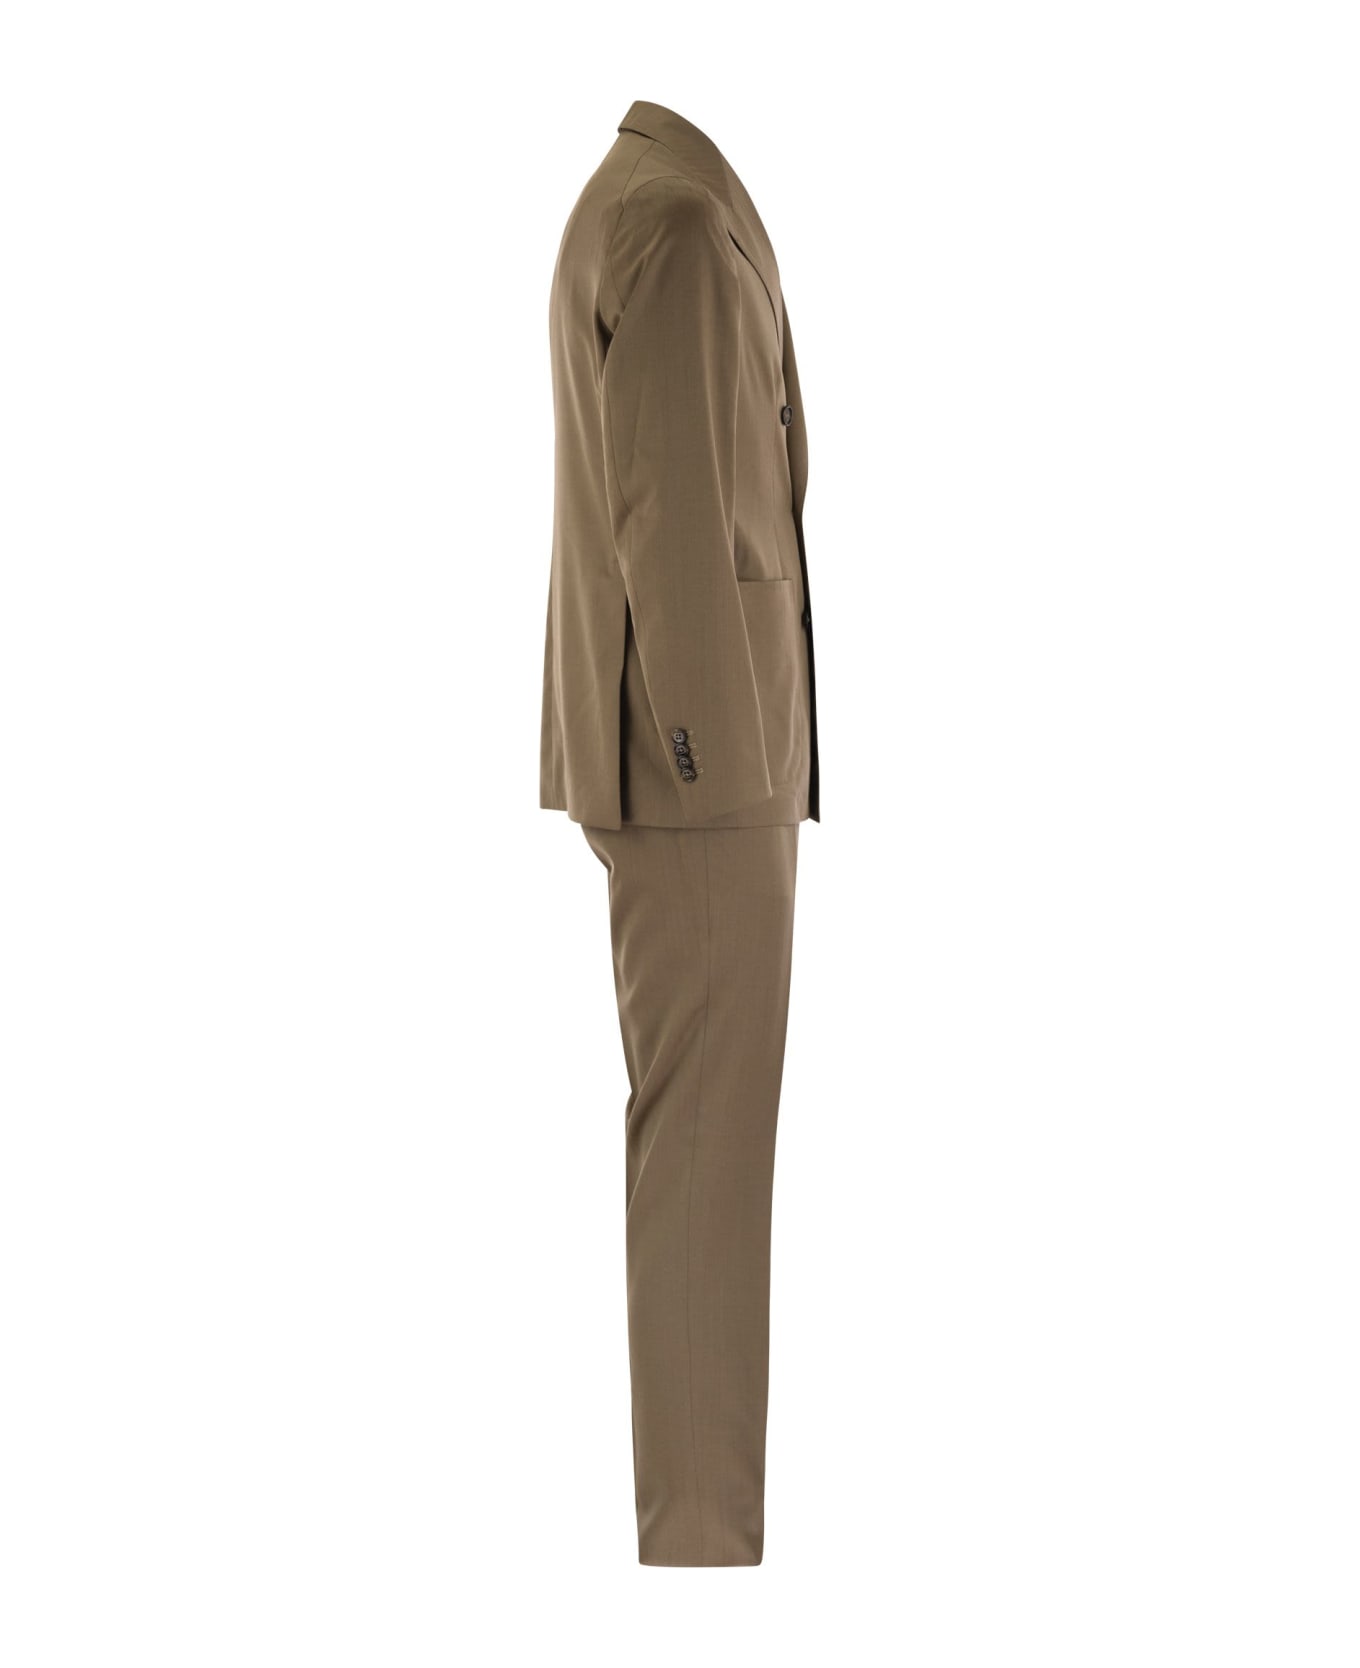 Tagliatore Wool Suit - Hazelnut スーツ